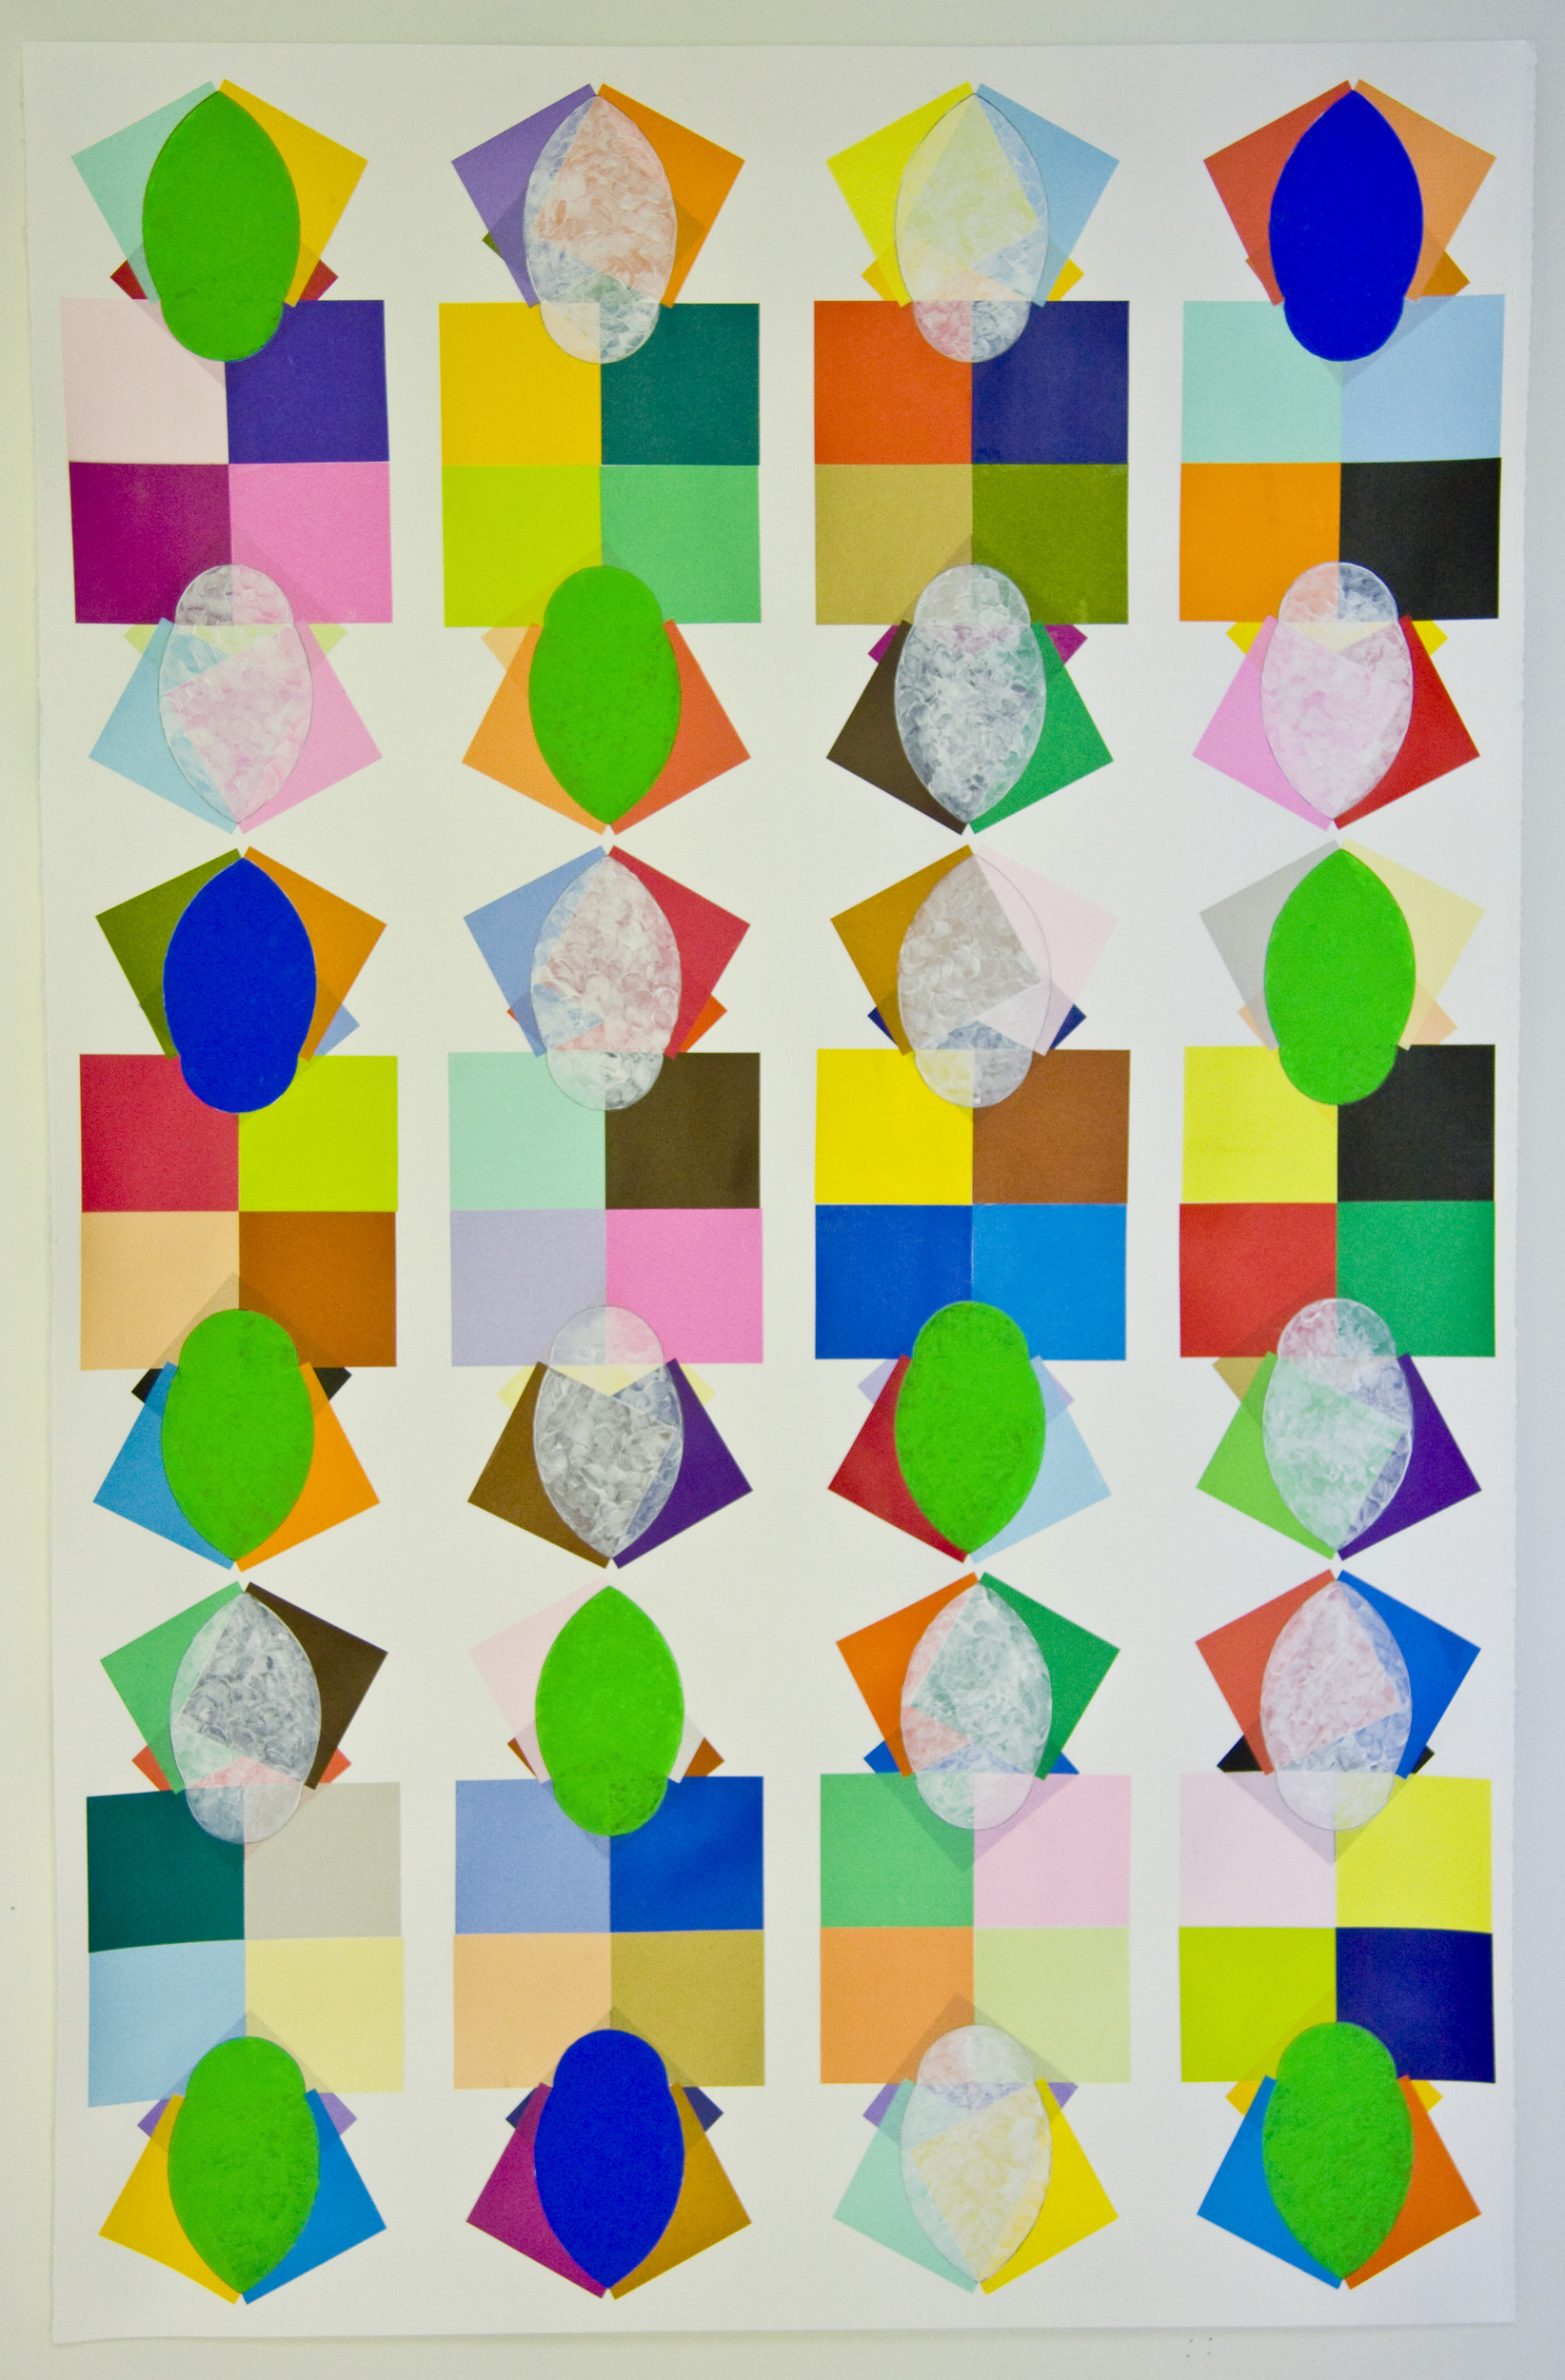 Mie Kongo 2009 - Multiplying Origami paper, gouache, graphite